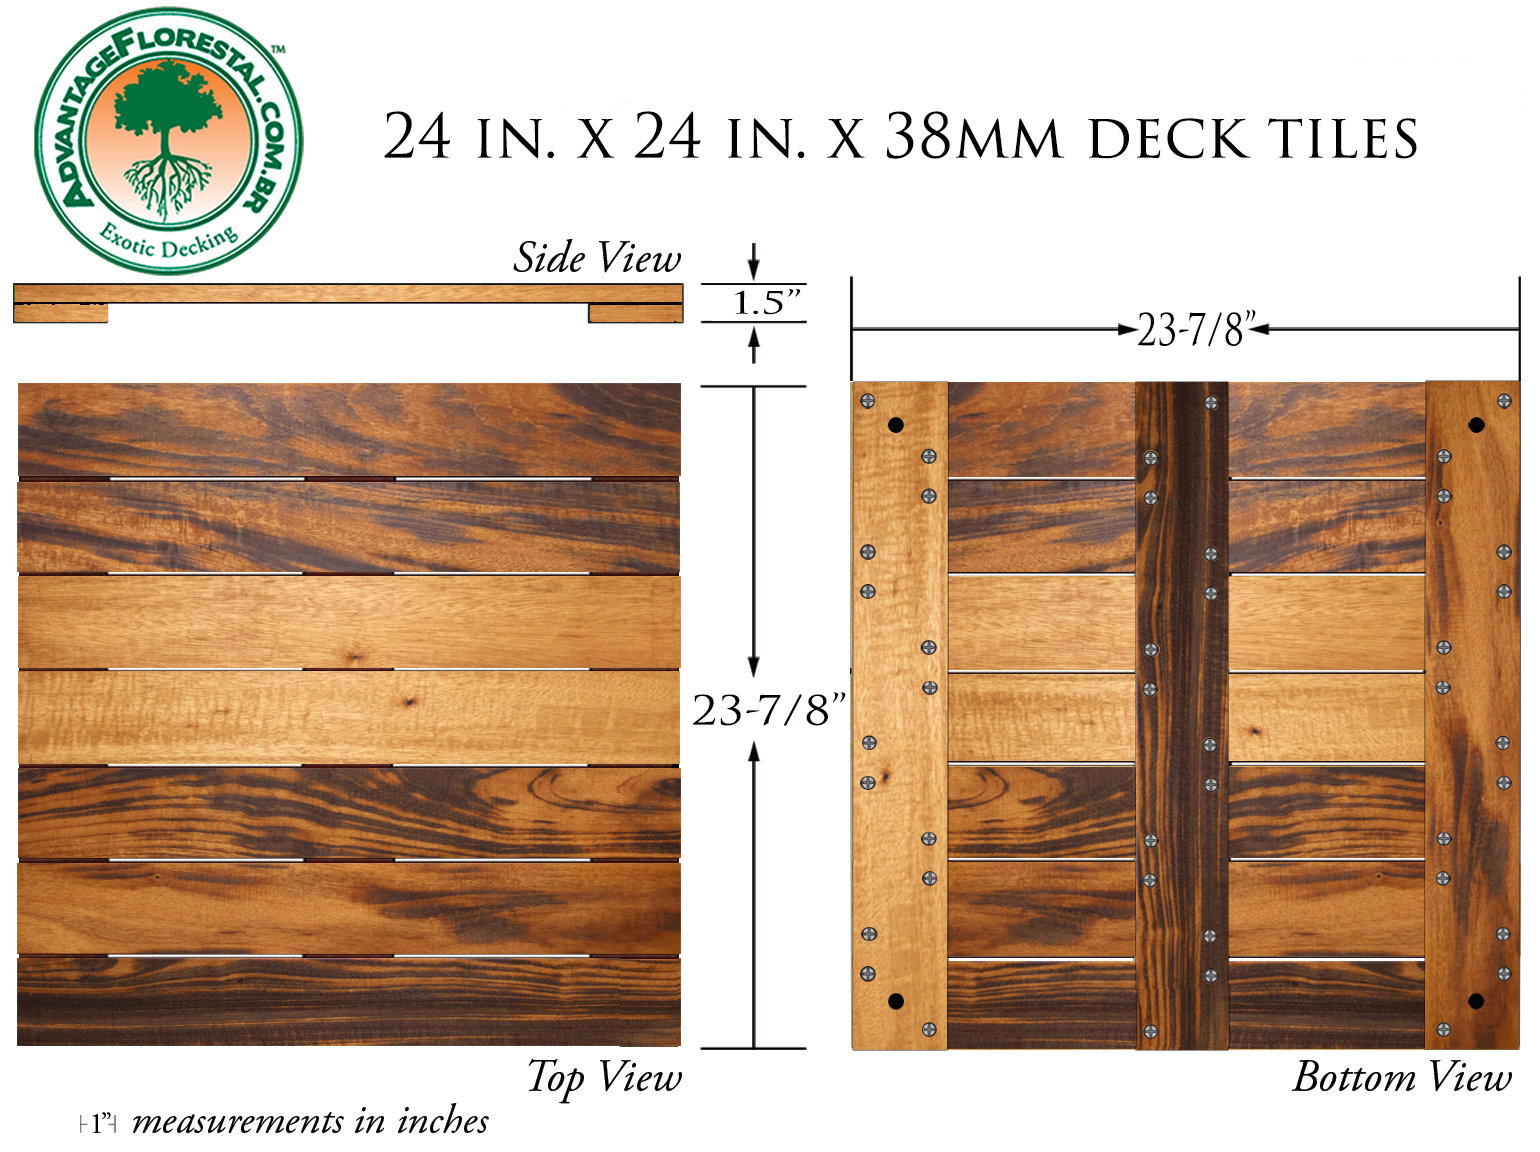 Tigerwood Deck Tile 24 in. x 24 in. x 38mm